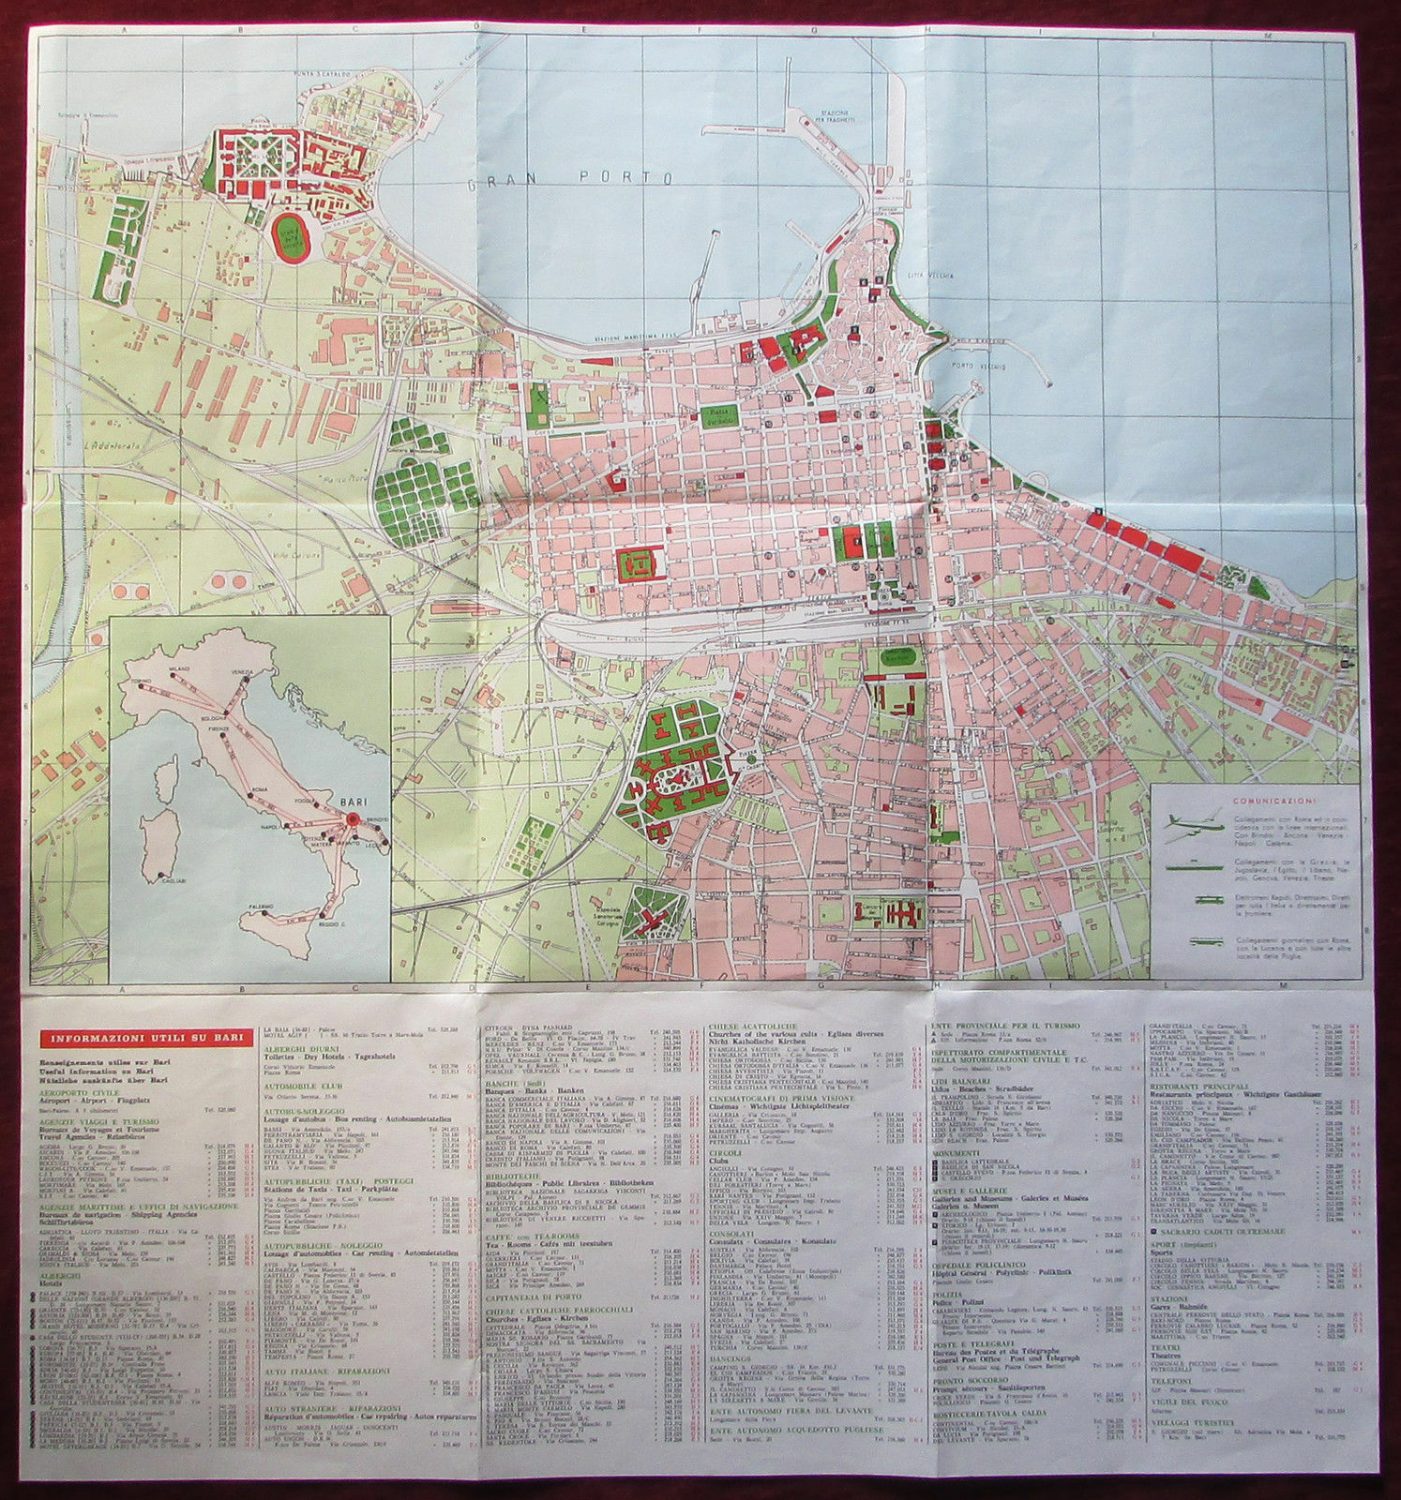 tourist map of bari italy